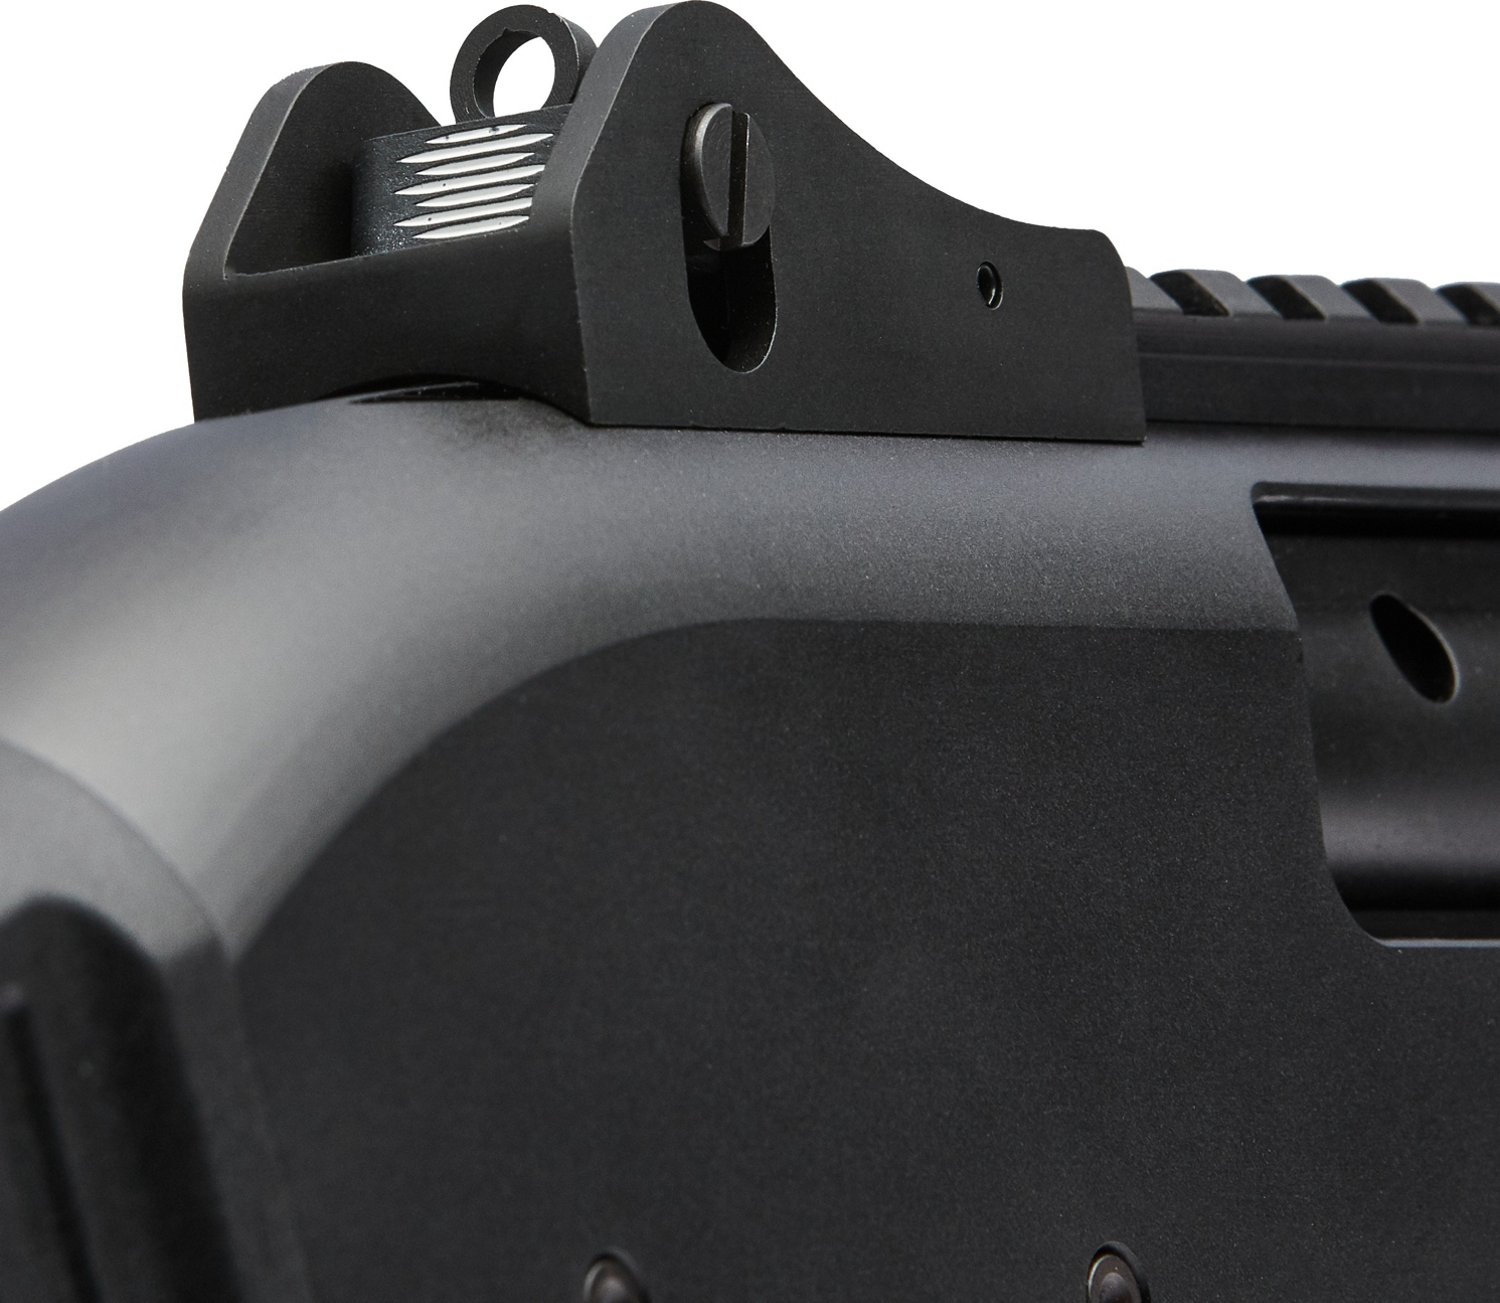 ATA Arms Etro Tactical 12 Gauge Pump-Action Hunting Shotgun                                                                      - view number 6